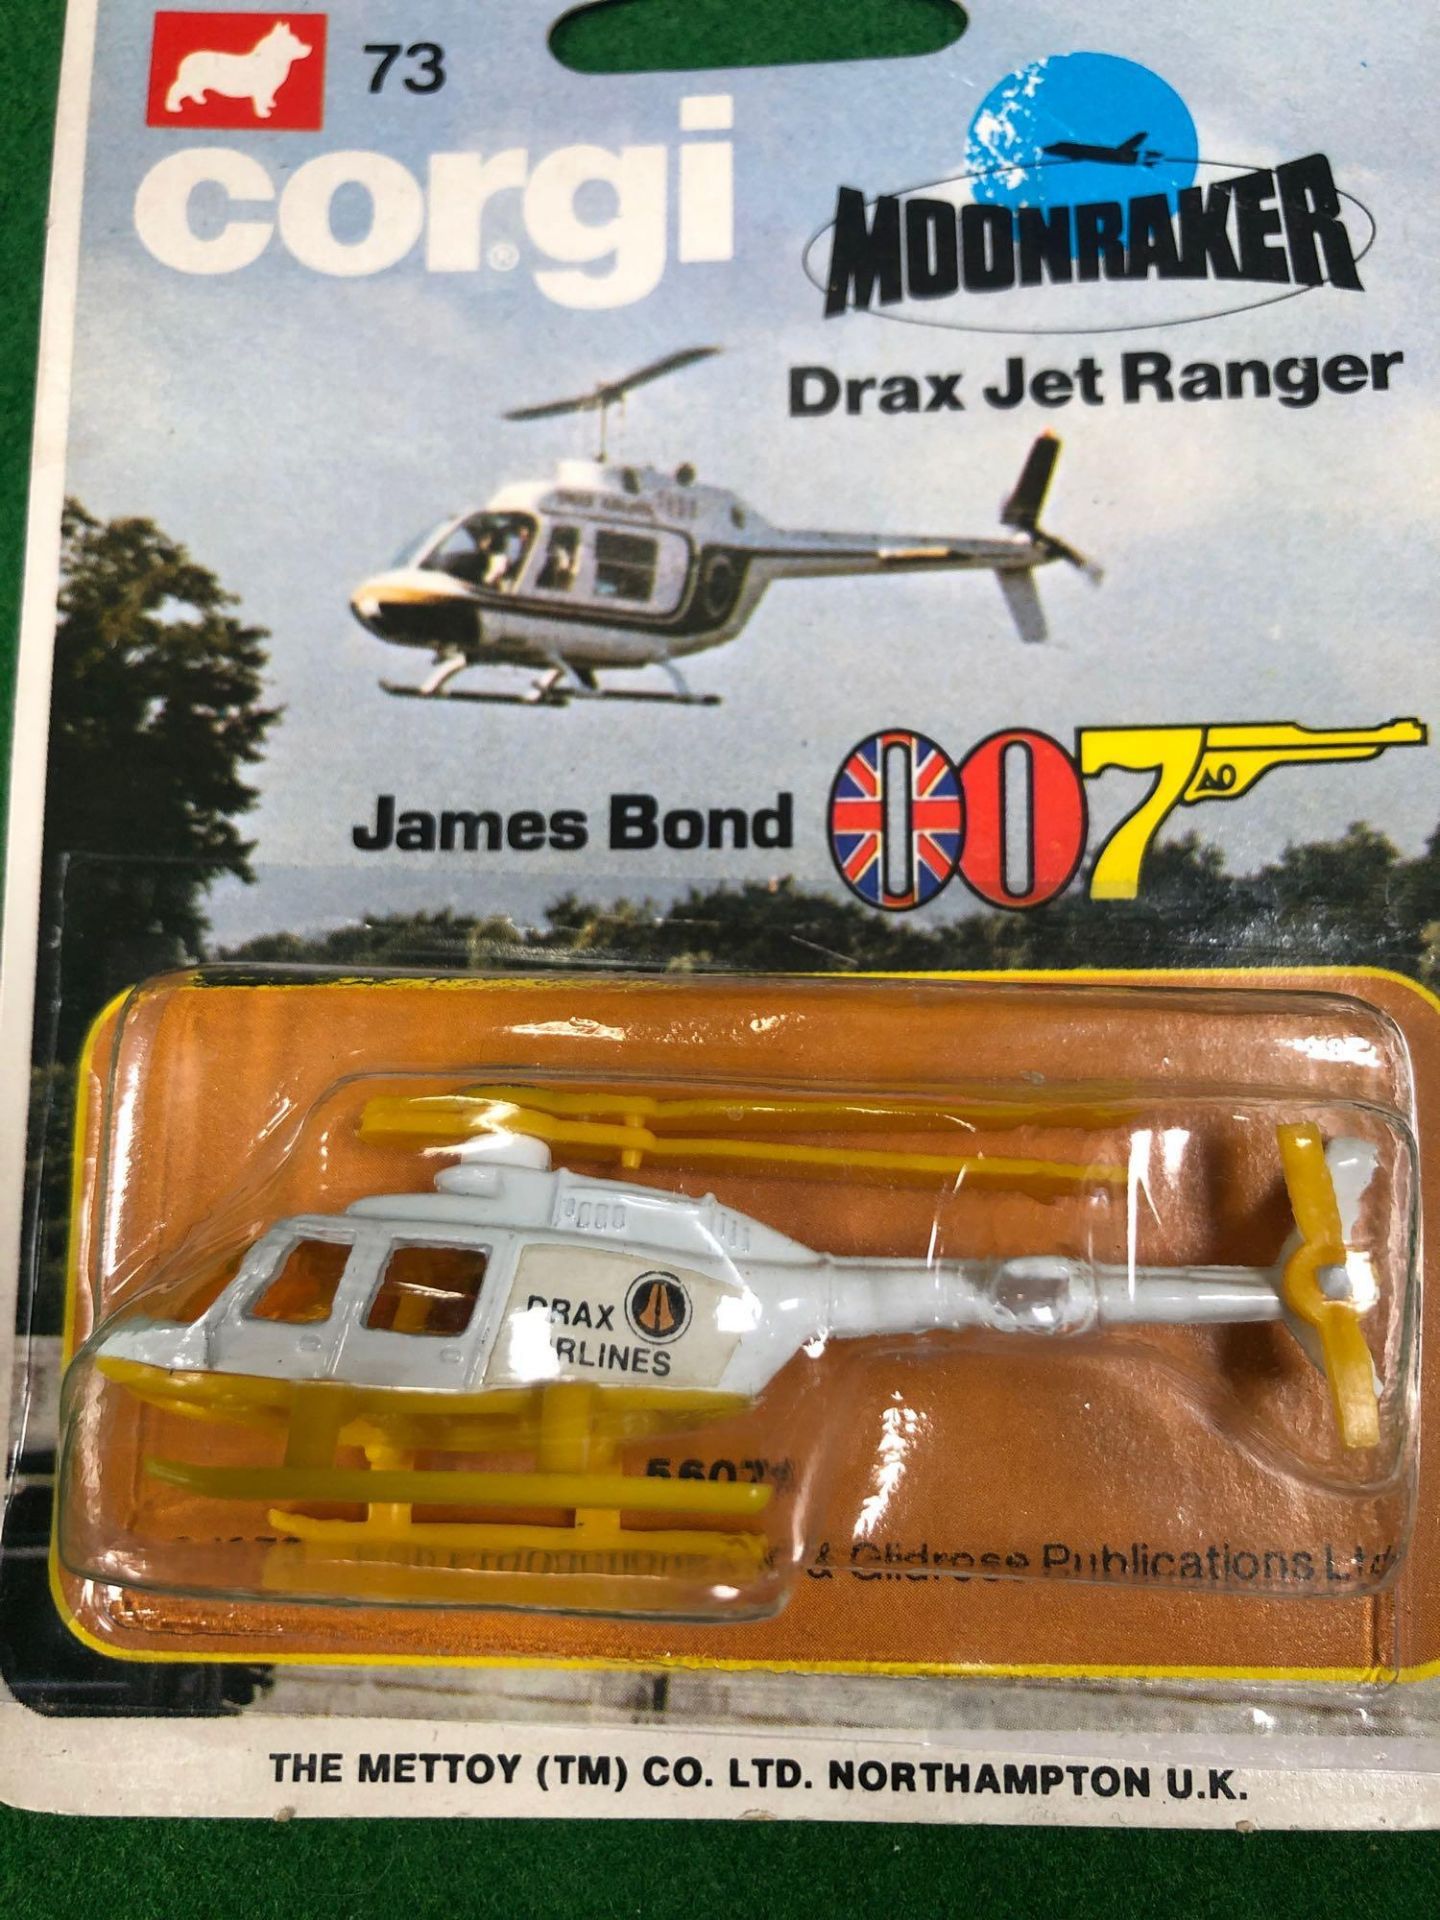 Corgi Toys Junior 73 Drax Jet Ranger James Bond Moonraker On Unopened Card - Image 2 of 2